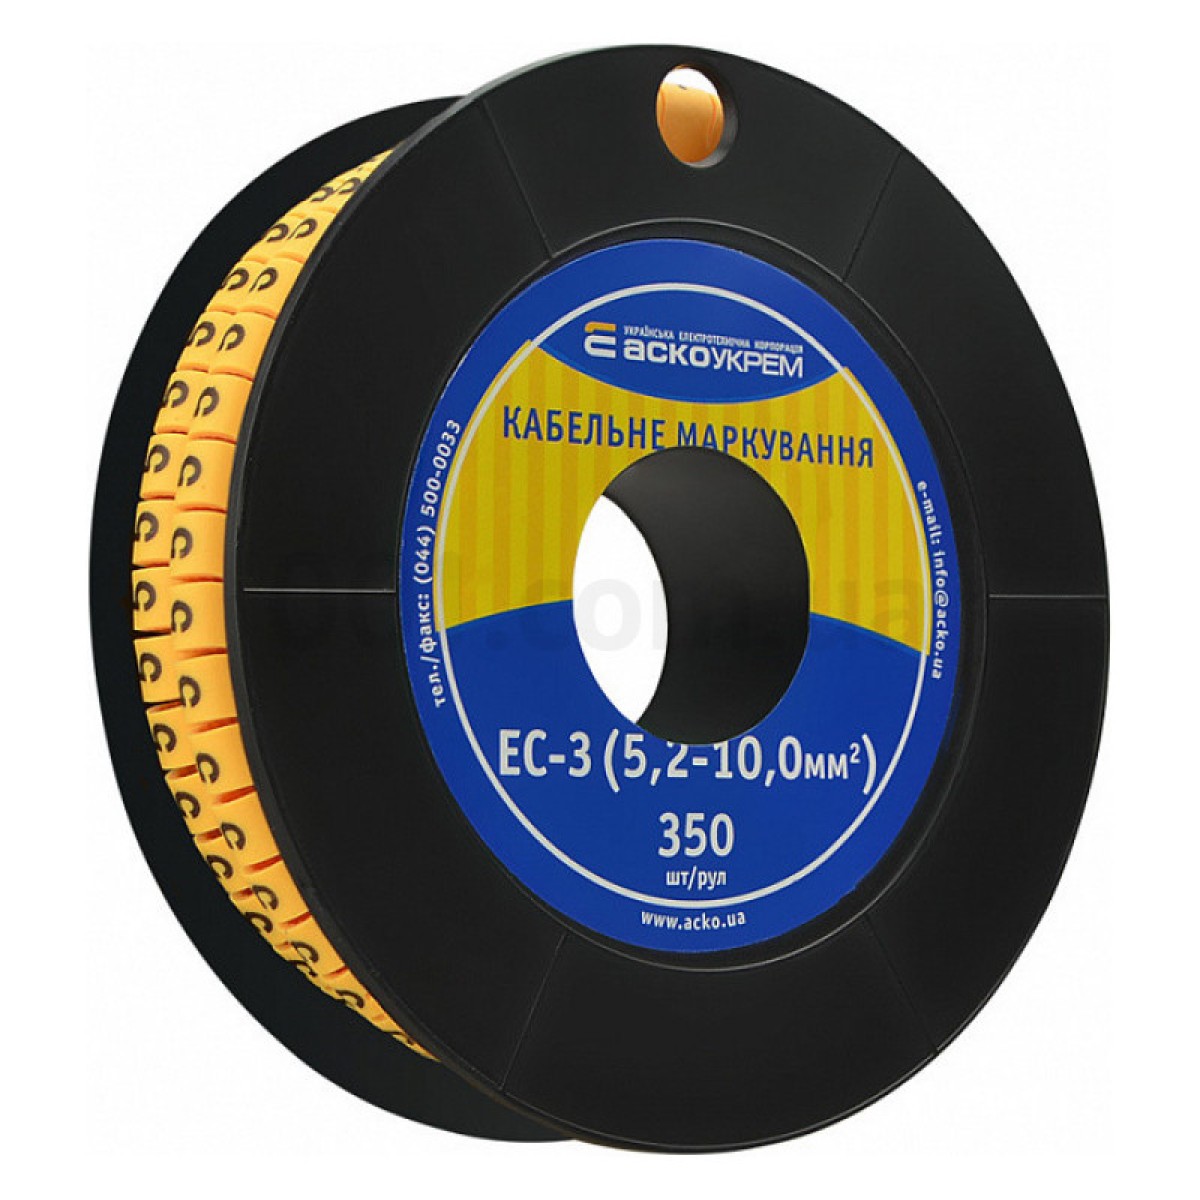 Маркировка EC-3 для кабеля 5,2-10,0 мм² символ «5» (рулон 250 шт.), АСКО-УКРЕМ 98_98.jpg - фото 1